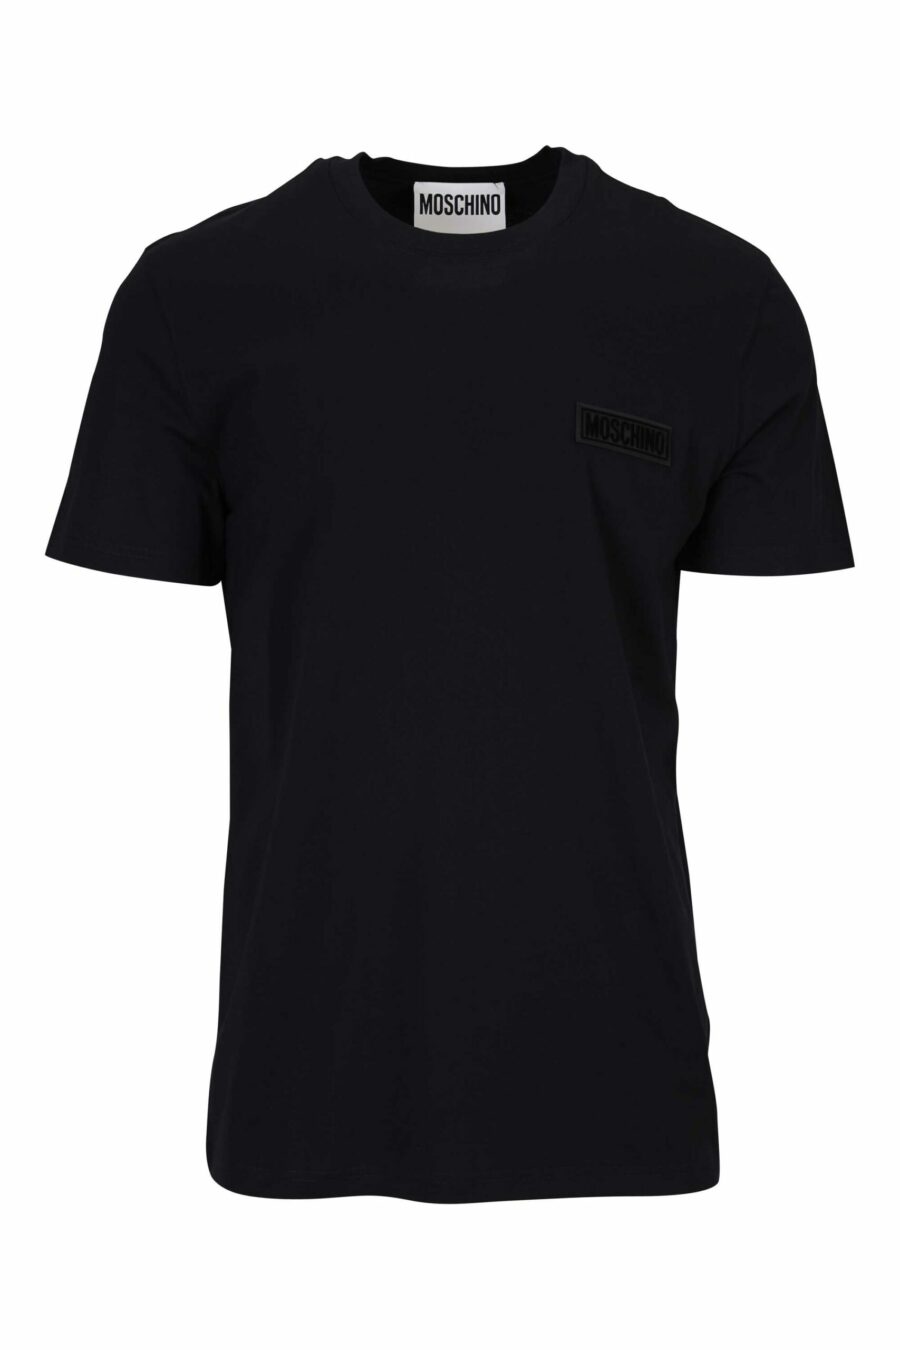 Black T-shirt with white mini-logo label - 667113394862 scaled